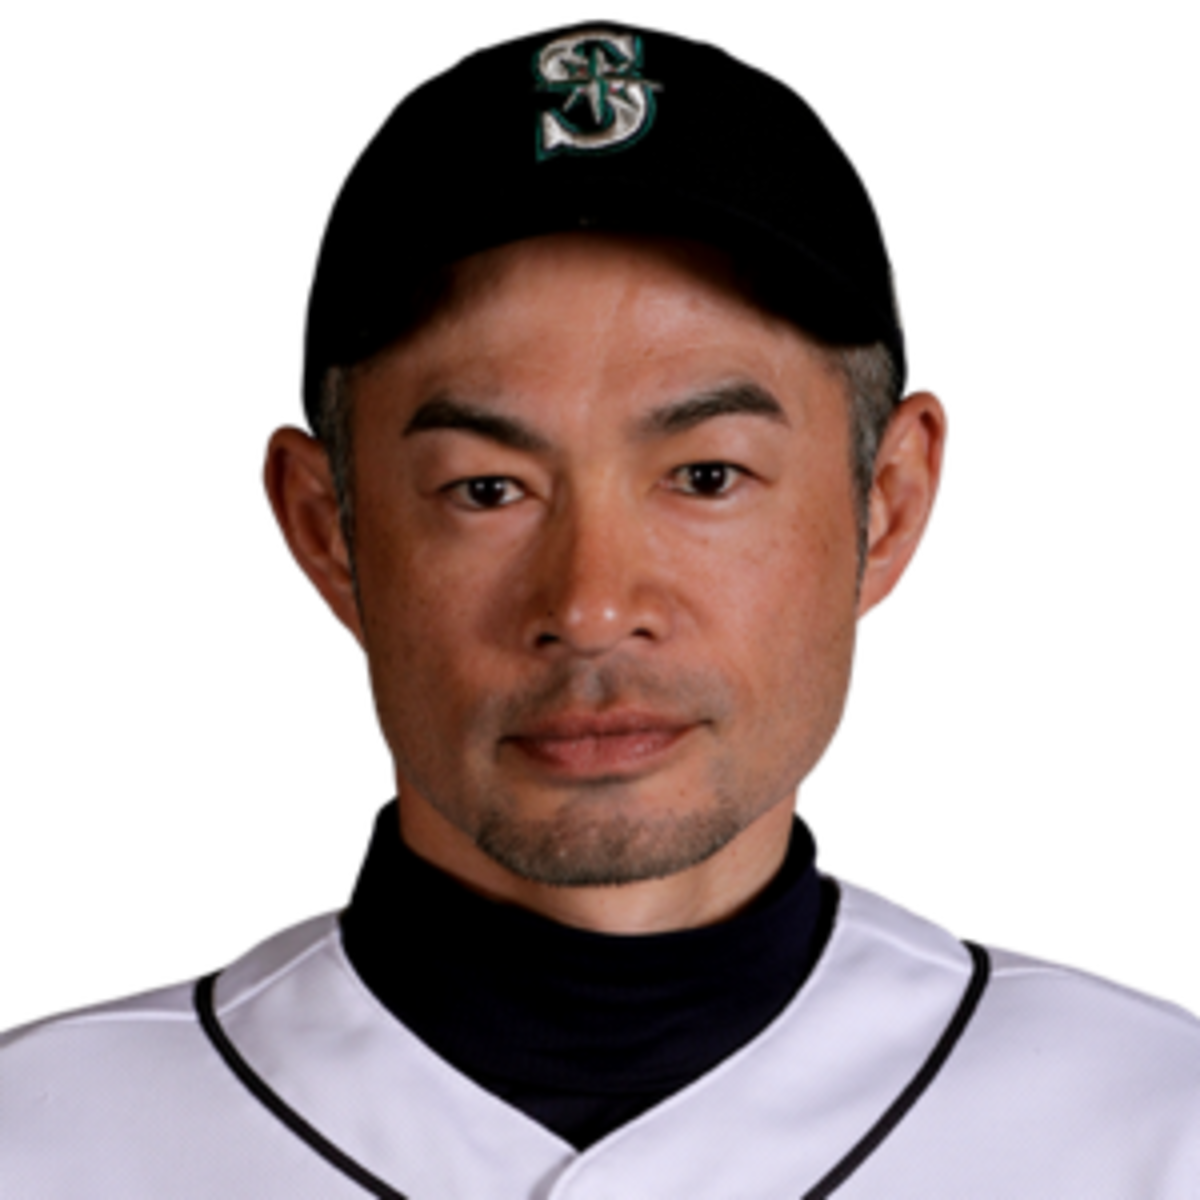 Ichiro Suzuki disguise on Seattle Mariners bench - Sports Illustrated